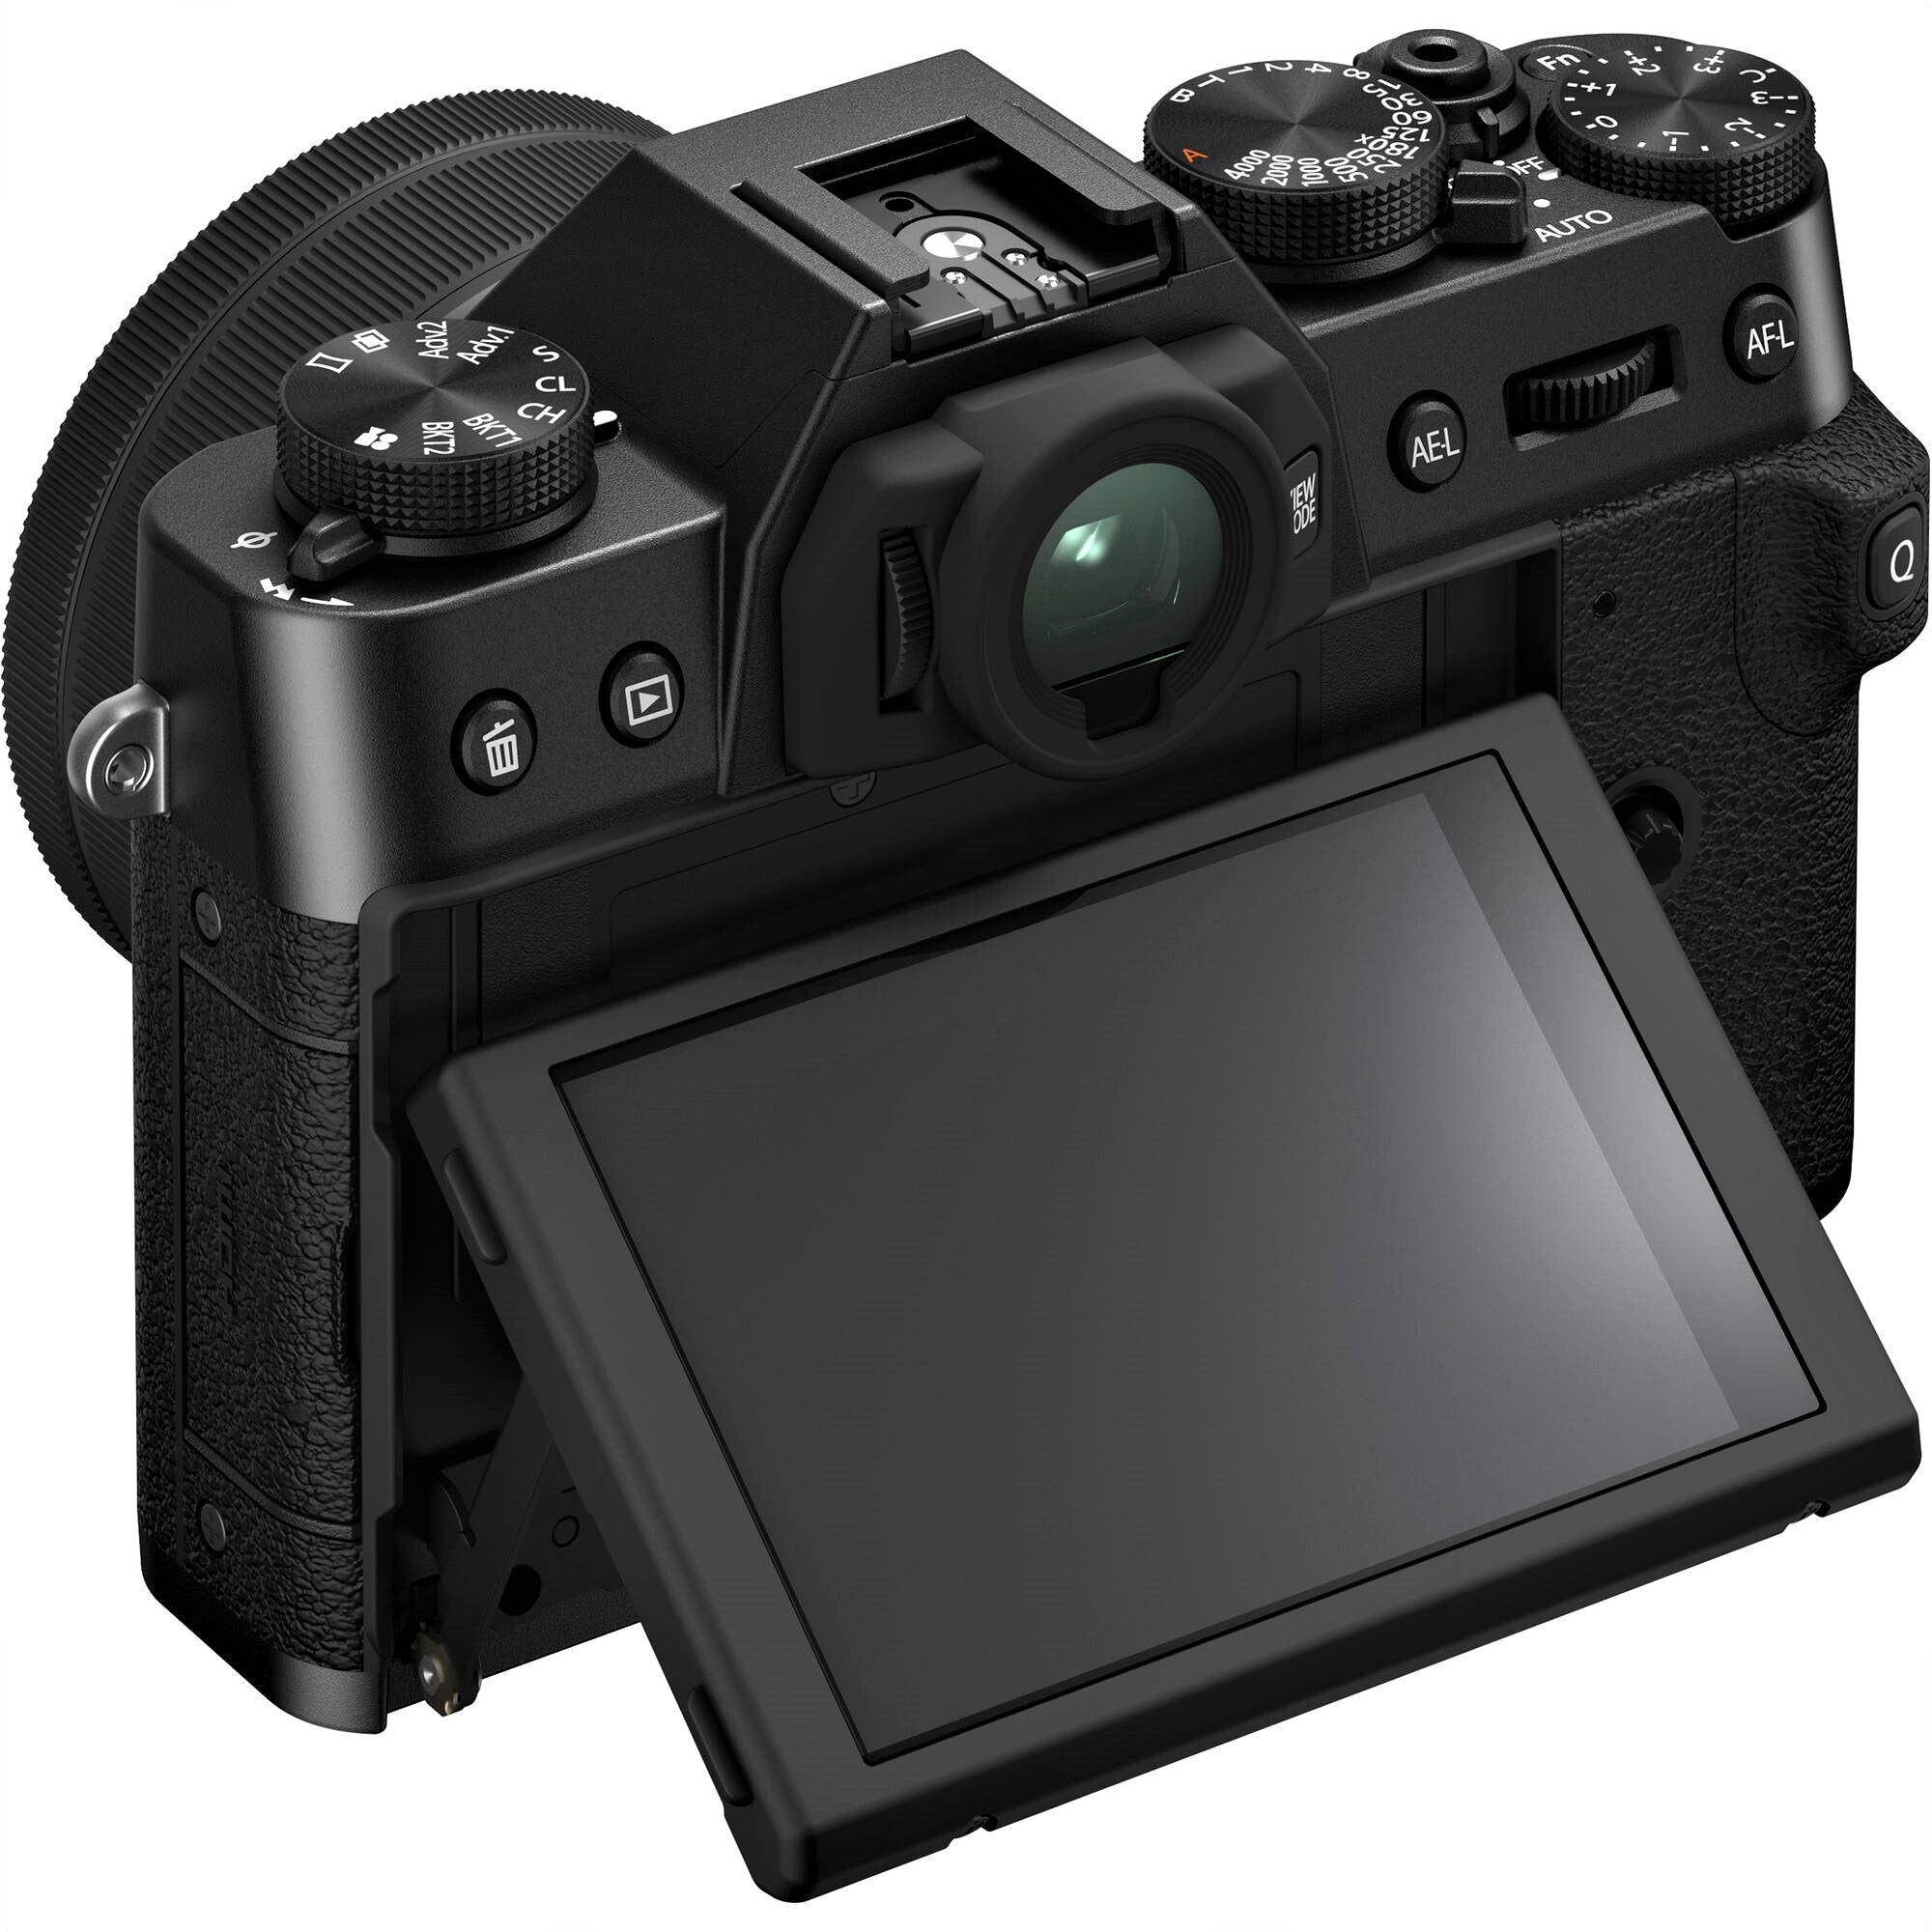 Fujifilm X-T30 II mirrorless camera review